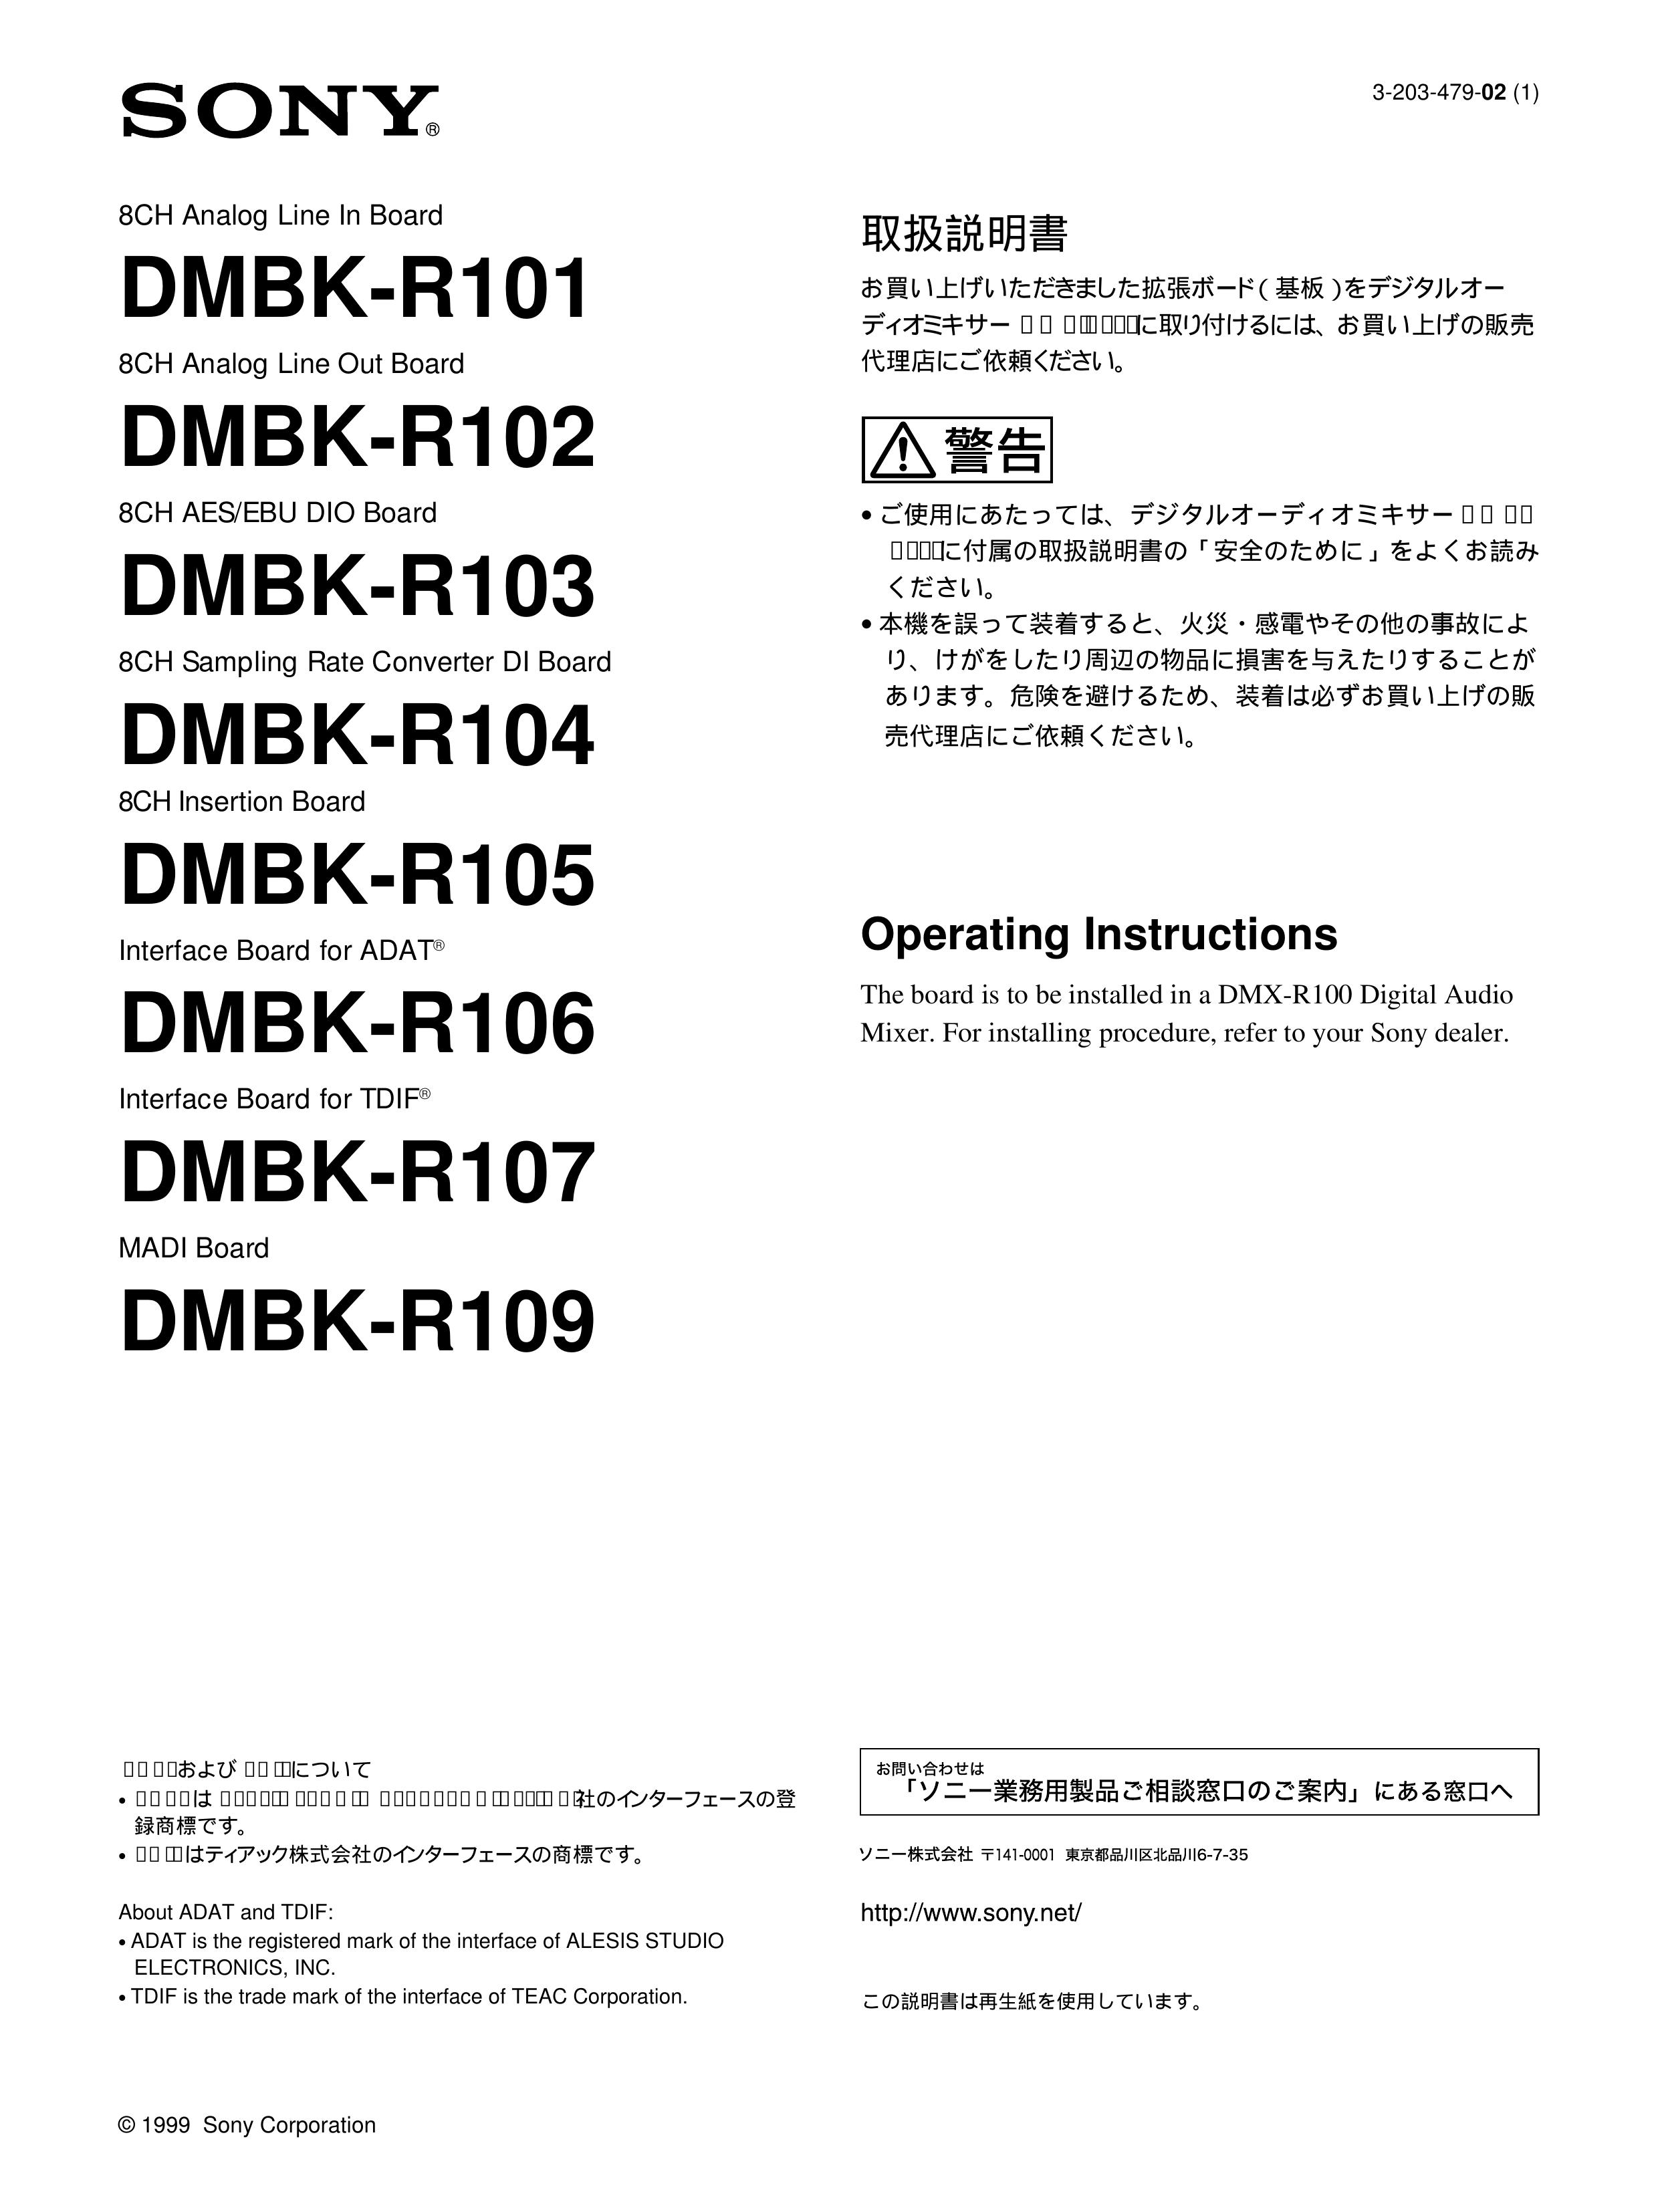 Sony DMBK-R102 Music Mixer User Manual